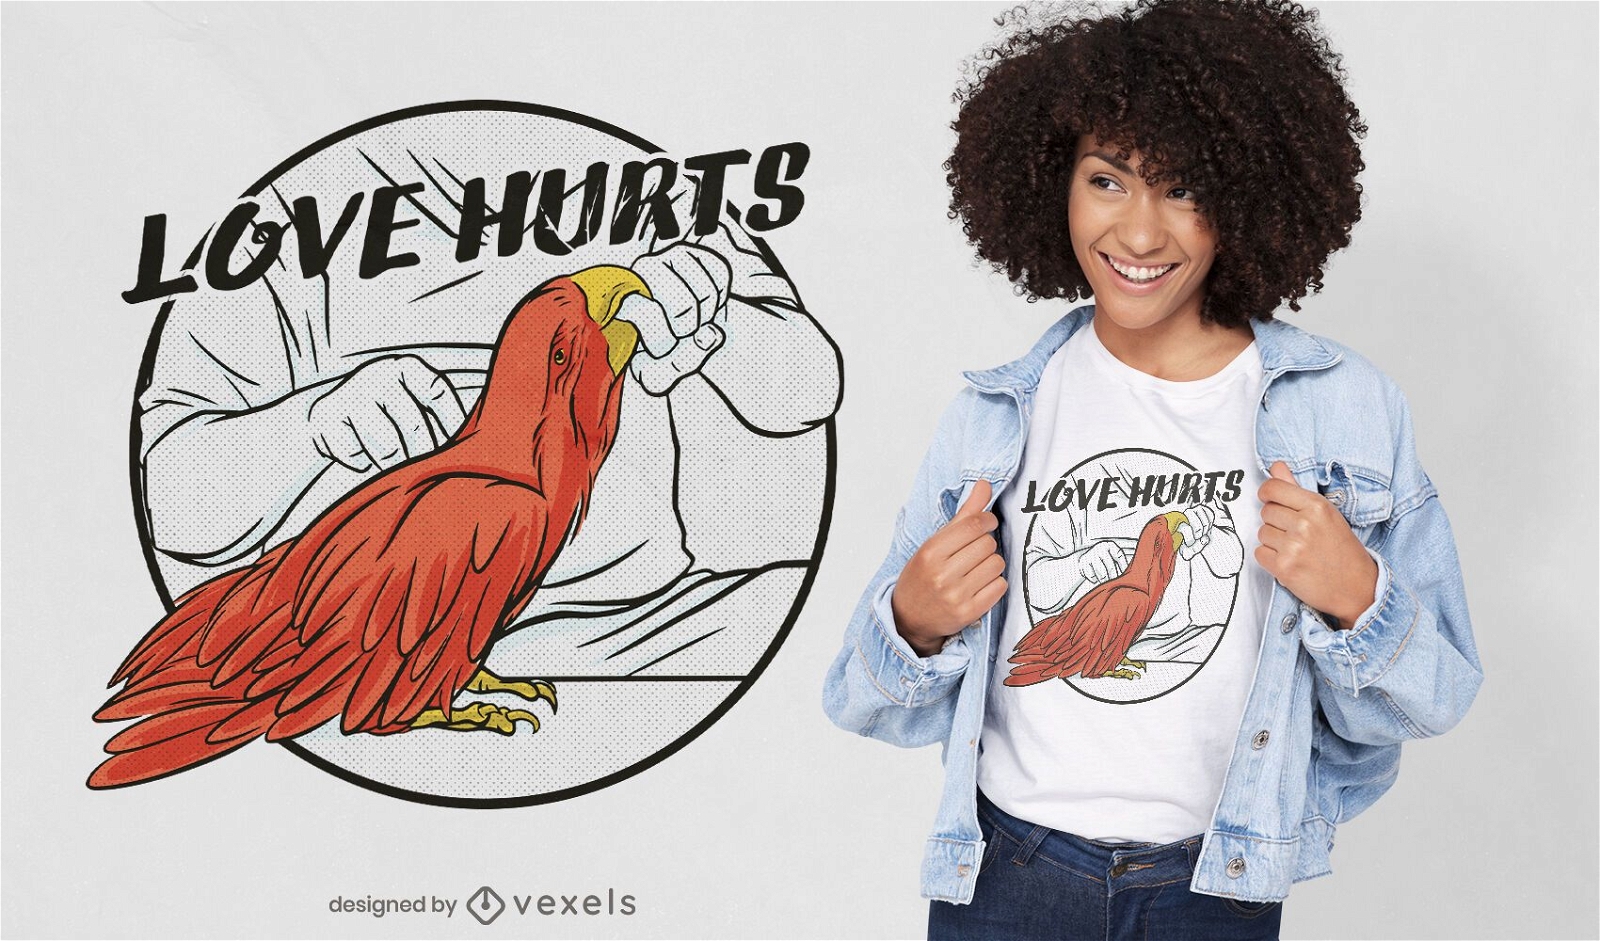 Love hurts t-shirt design